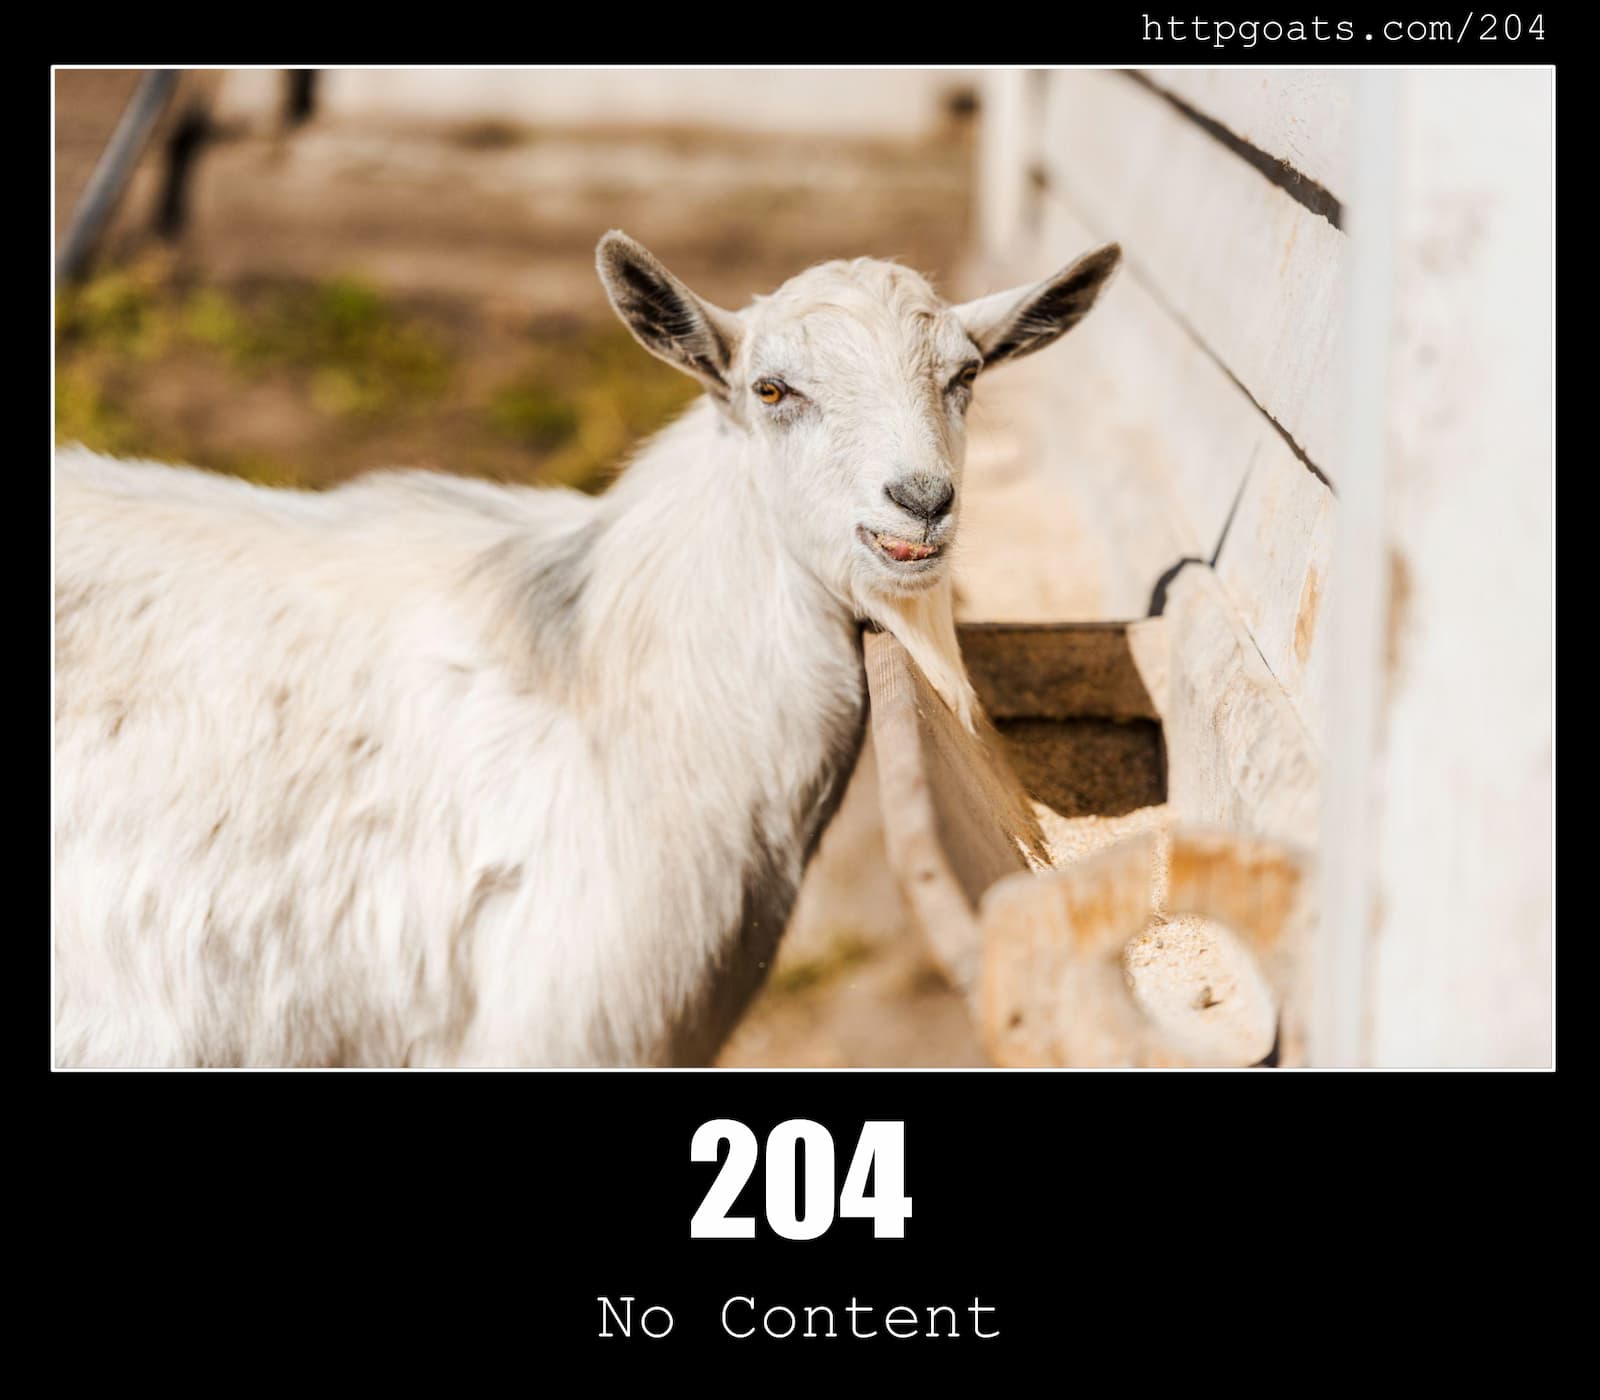 HTTP Status Code 204 No Content & Goats